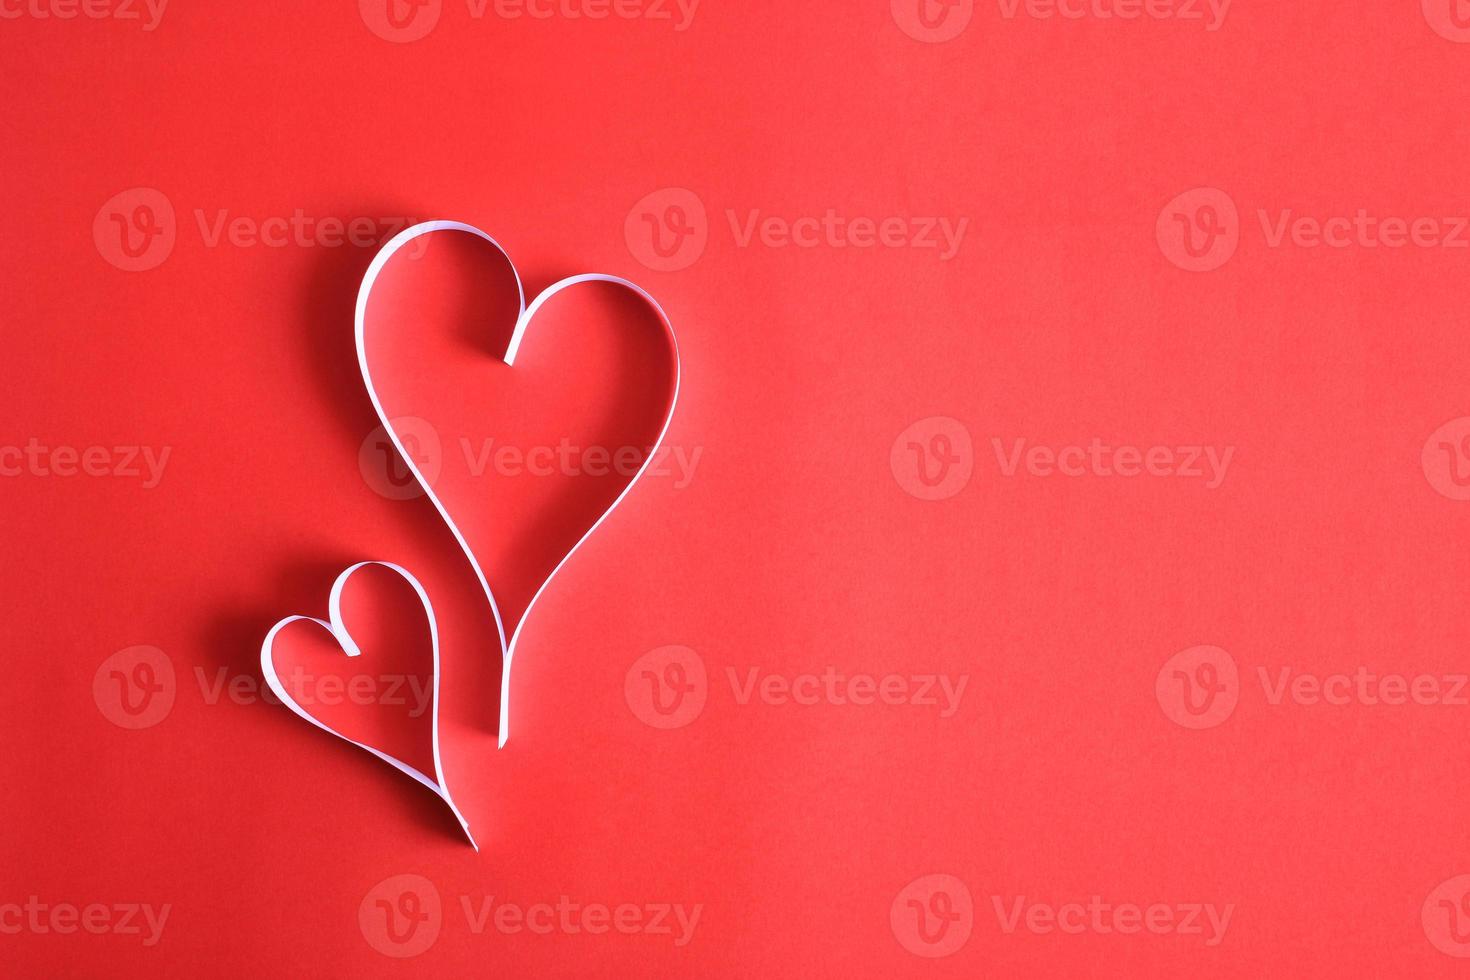 corazón papel san valentín día de san valentín día de san valentín - imagen foto